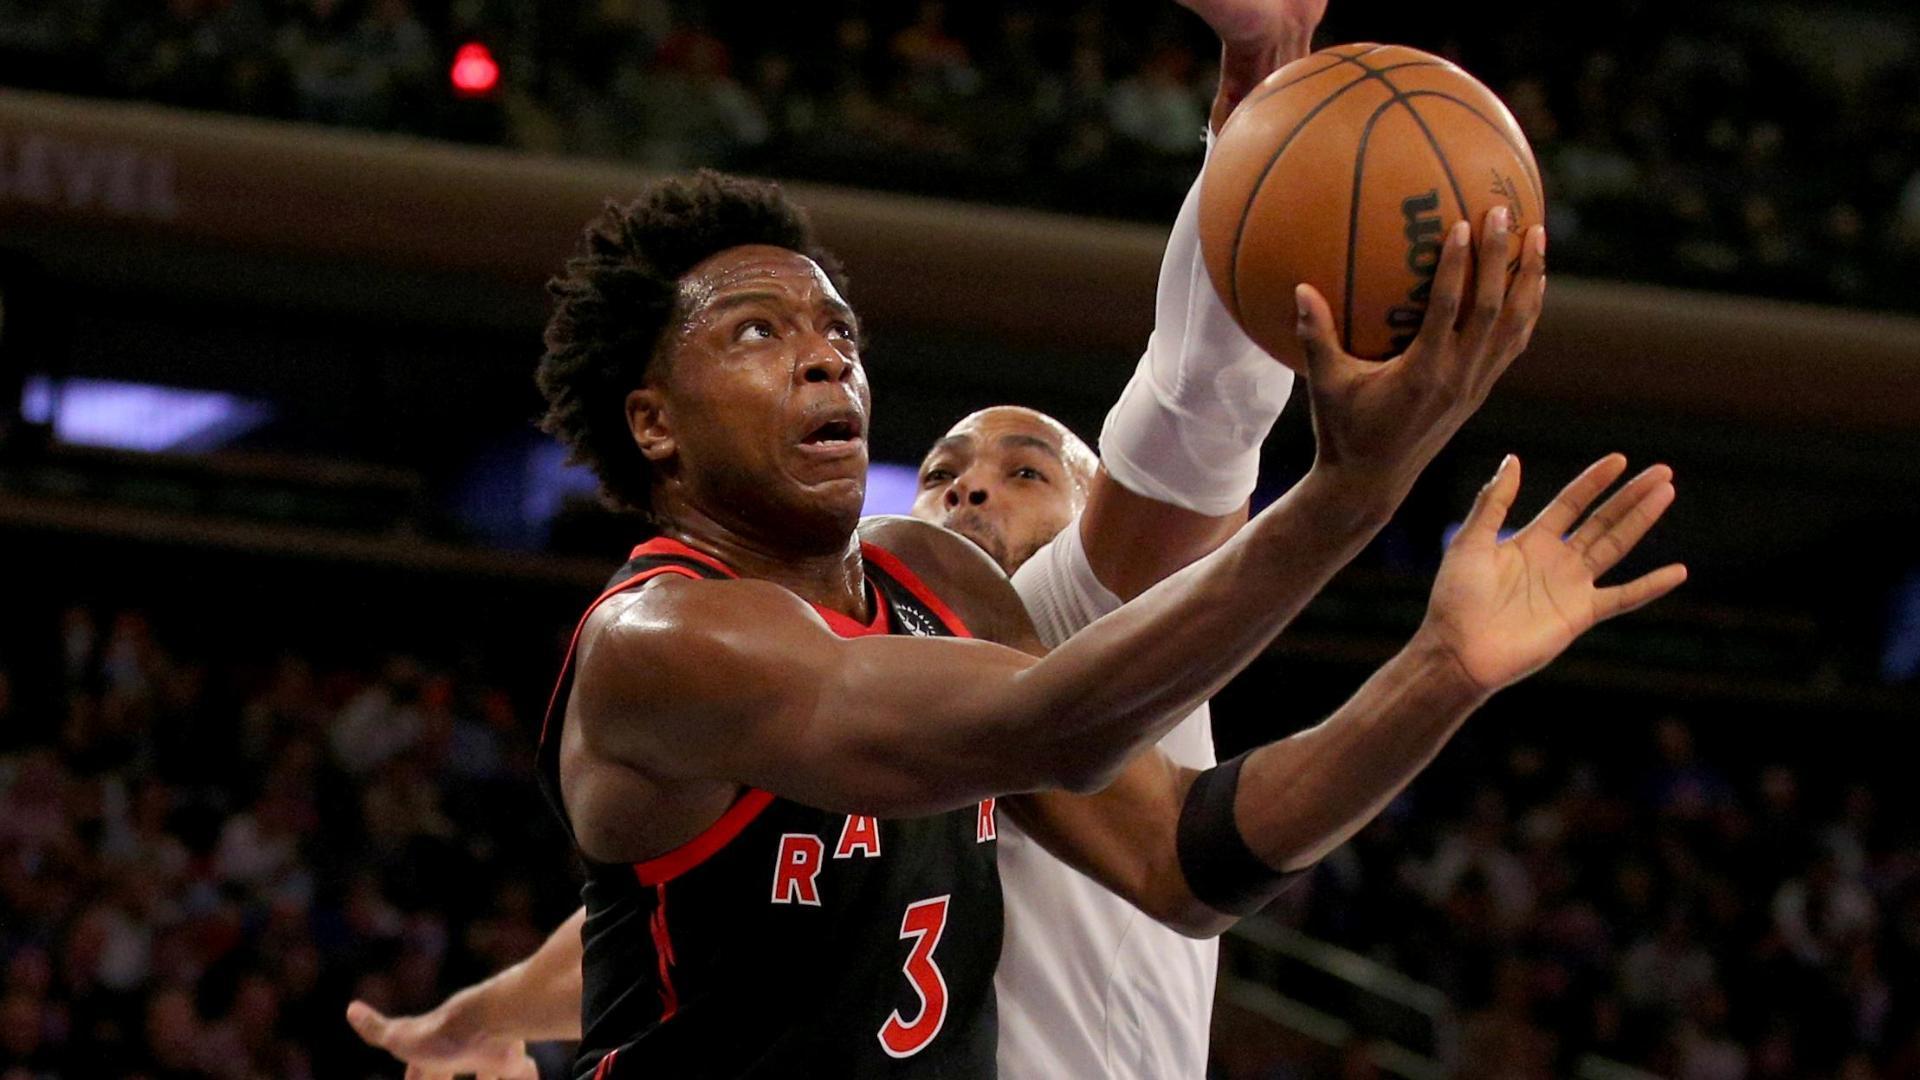 Anunoby drops career-high 36 as Raptors take down Knicks